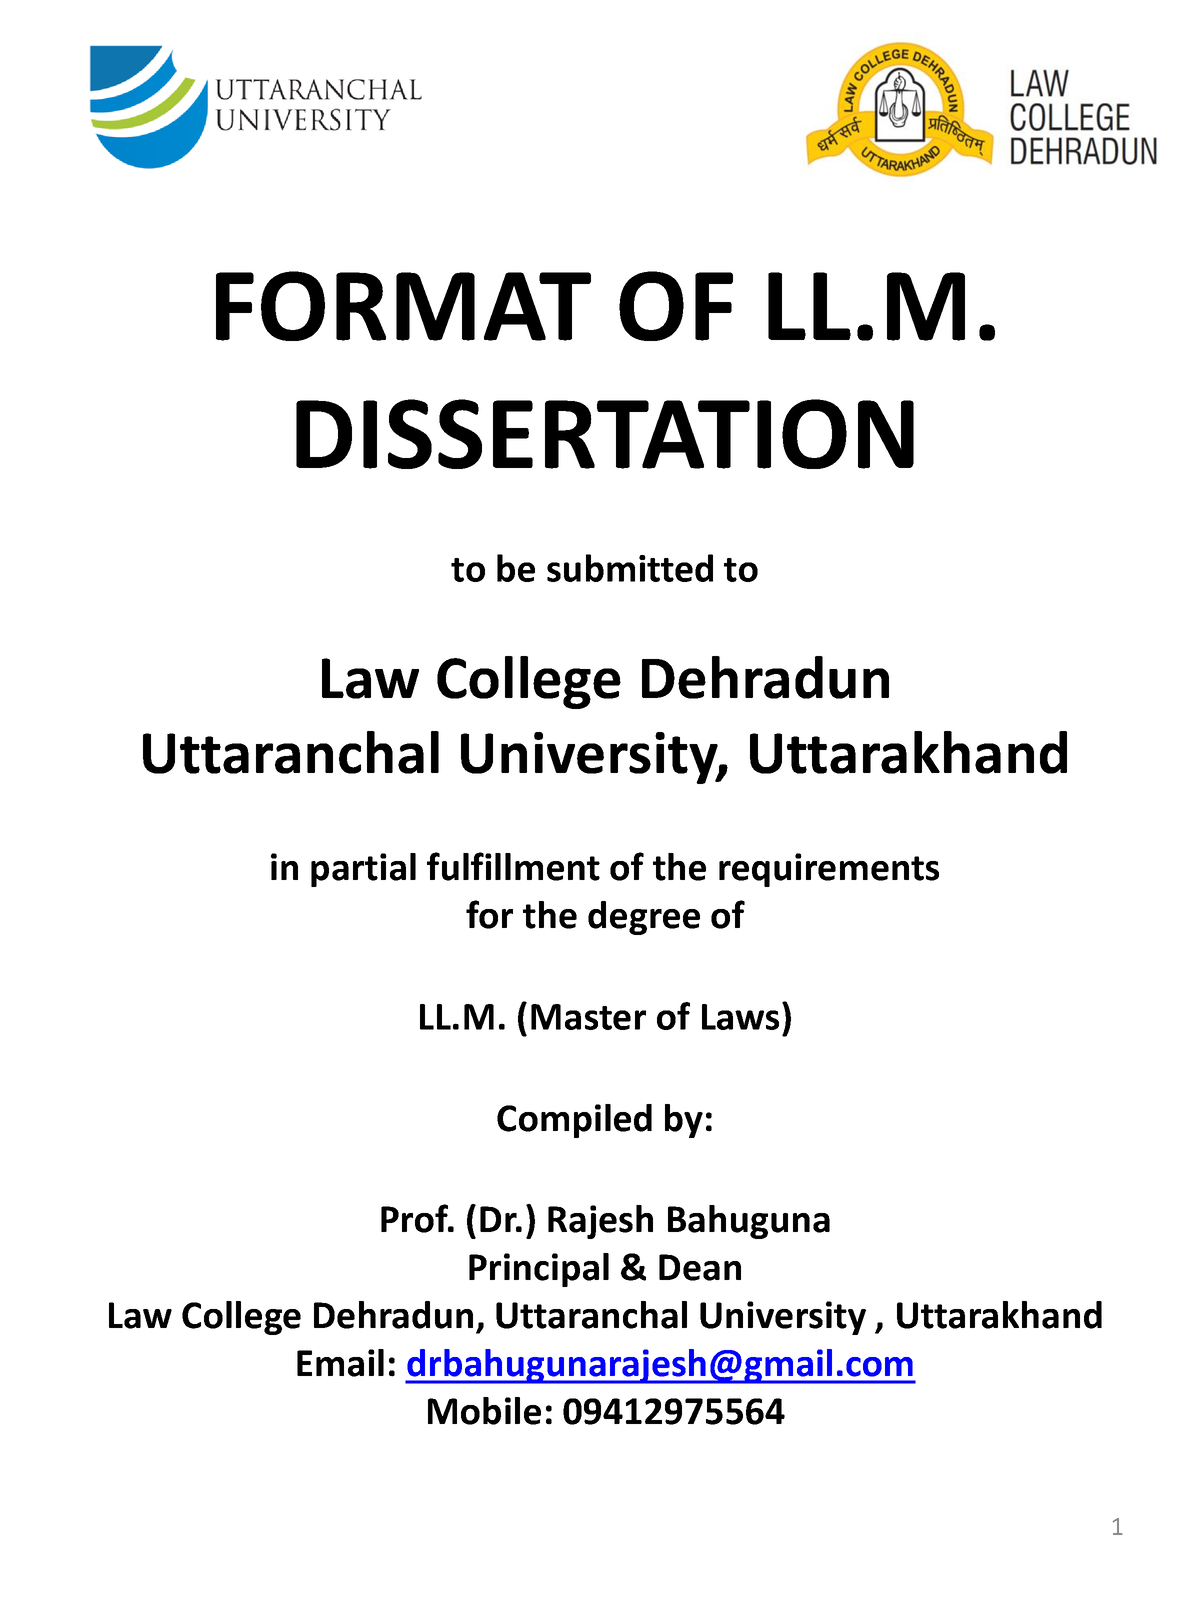 how to write an llm dissertation